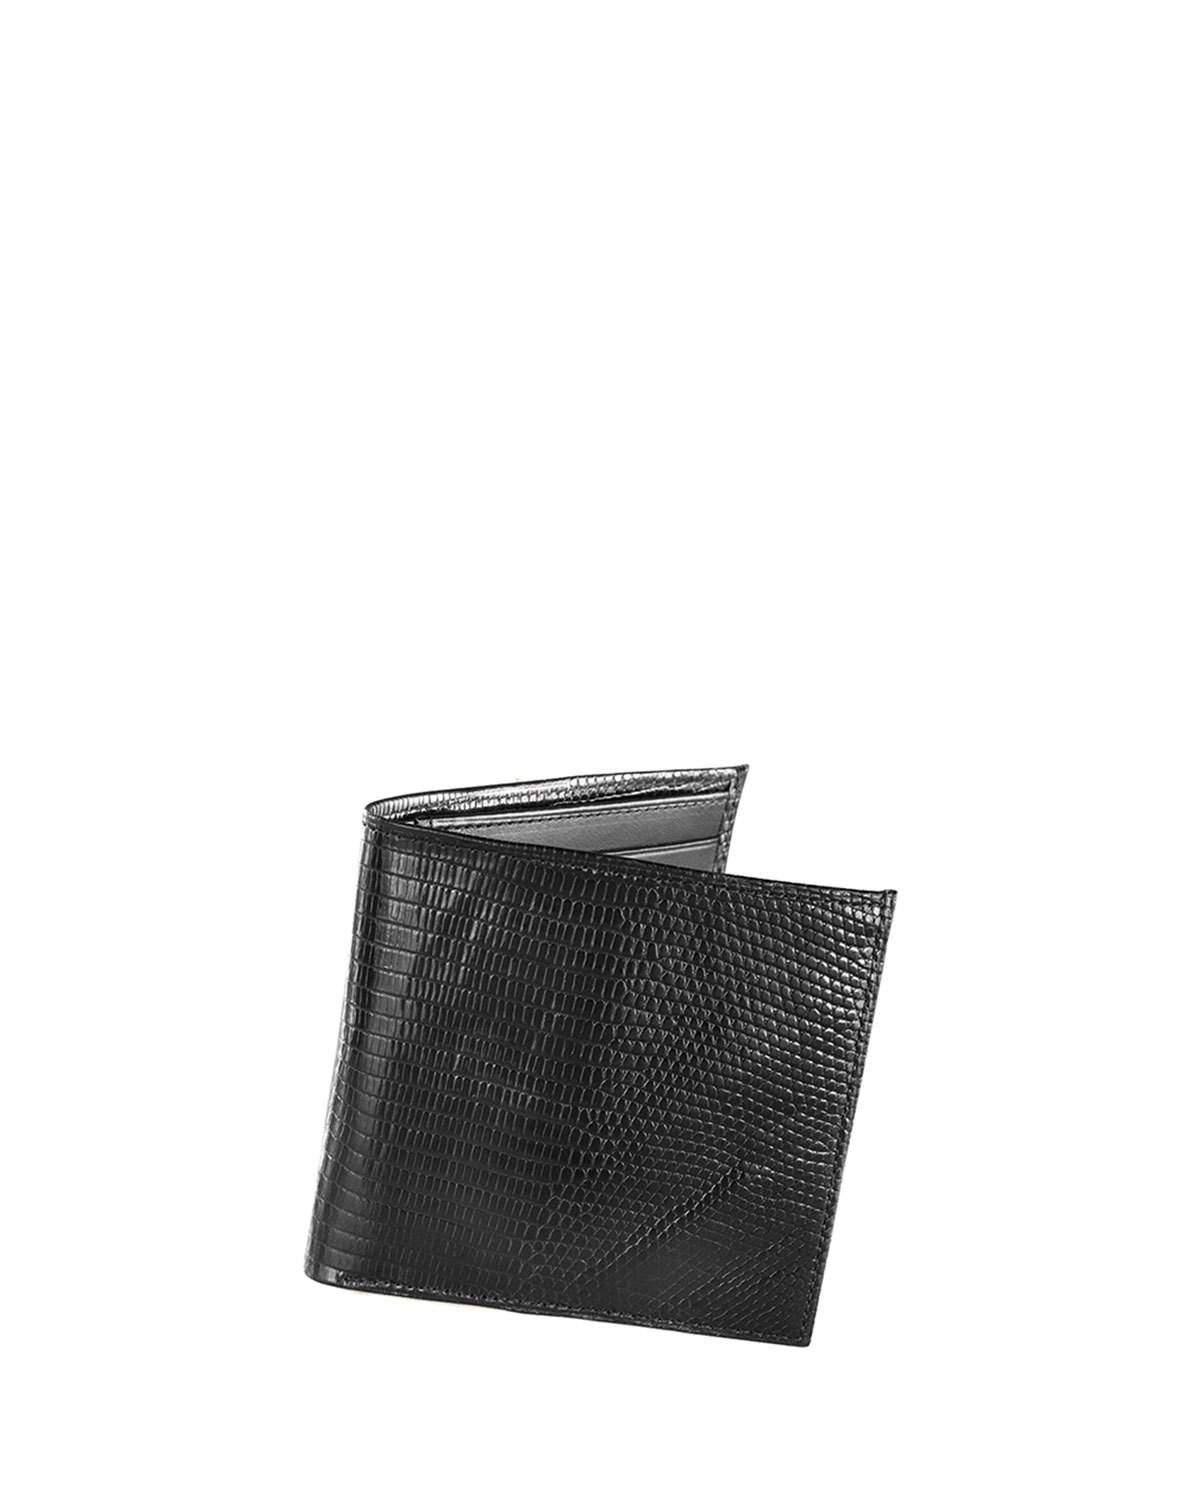 Lyst - Neiman Marcus Lizard Continental Wallet in Black for Men